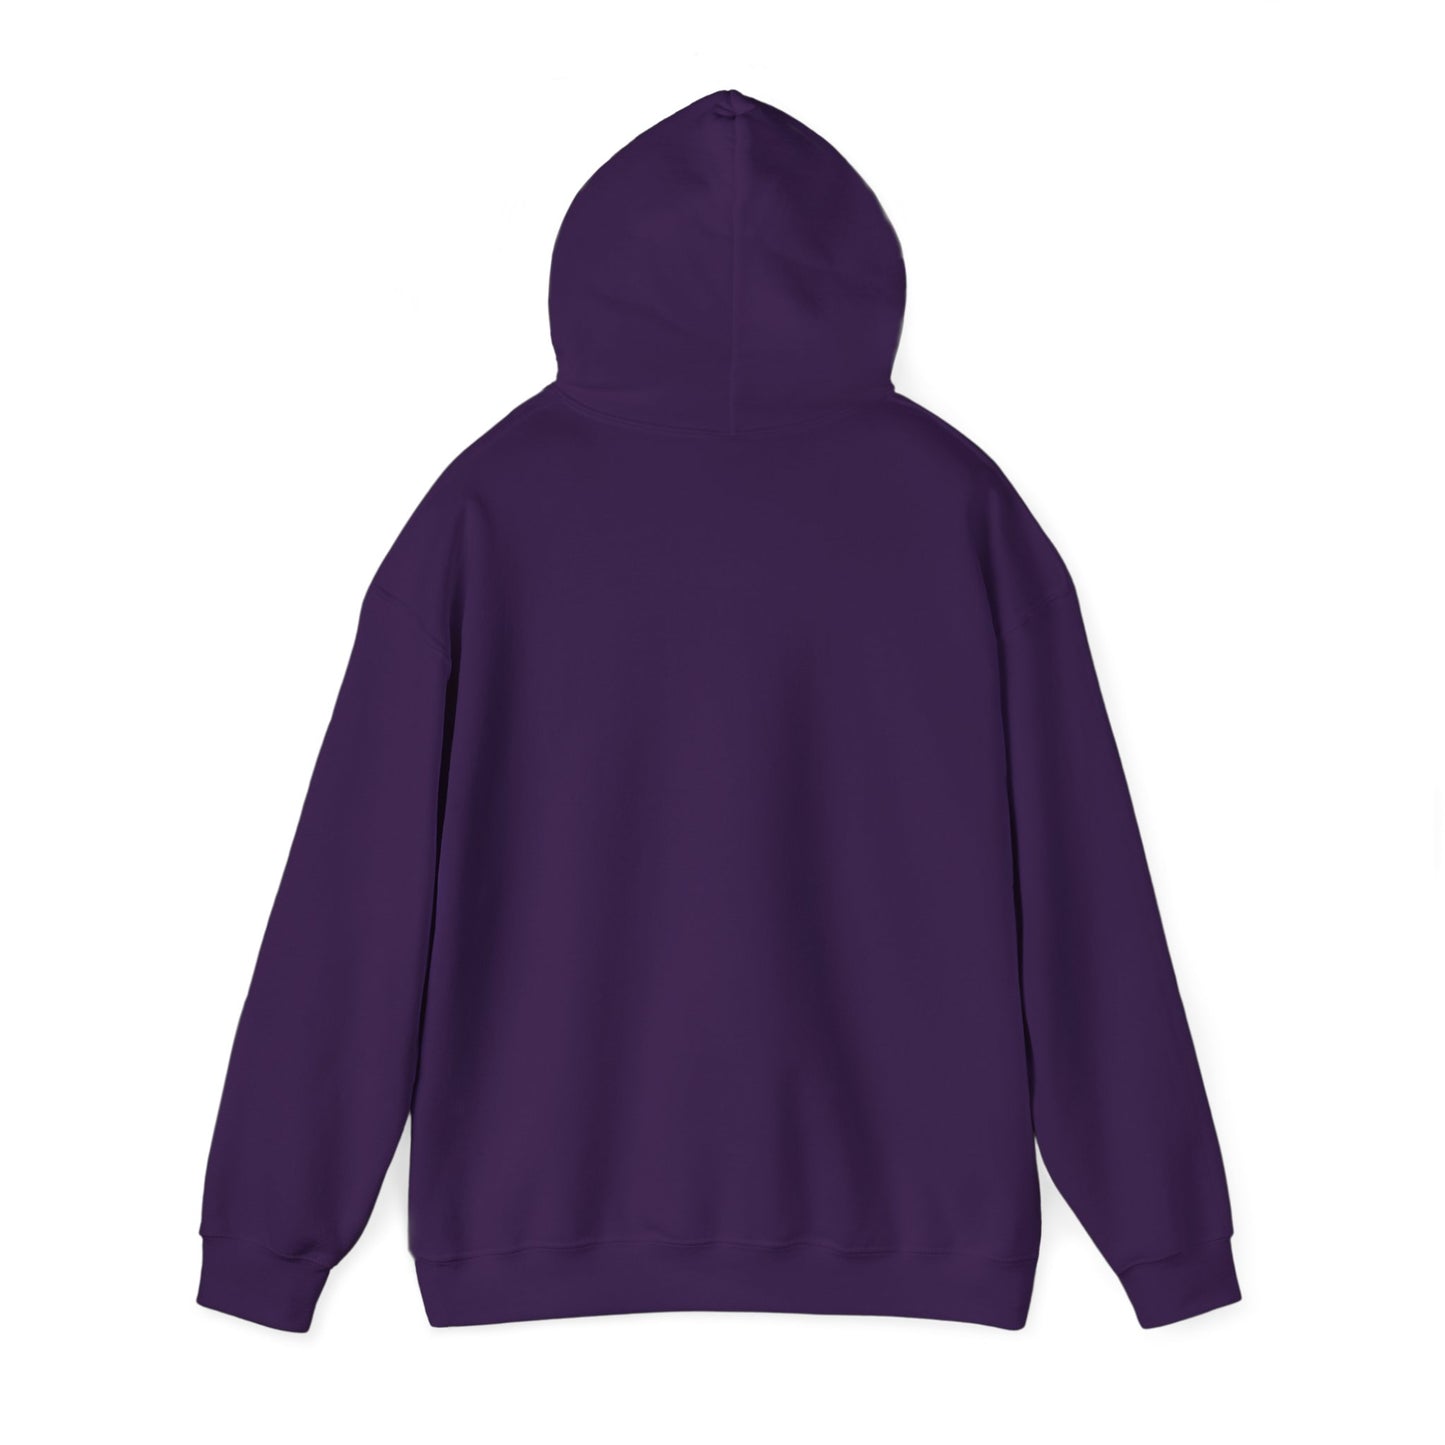 "Hardcore Homebody" Unisex Heavy Blend™ Hooded Sweatshirt